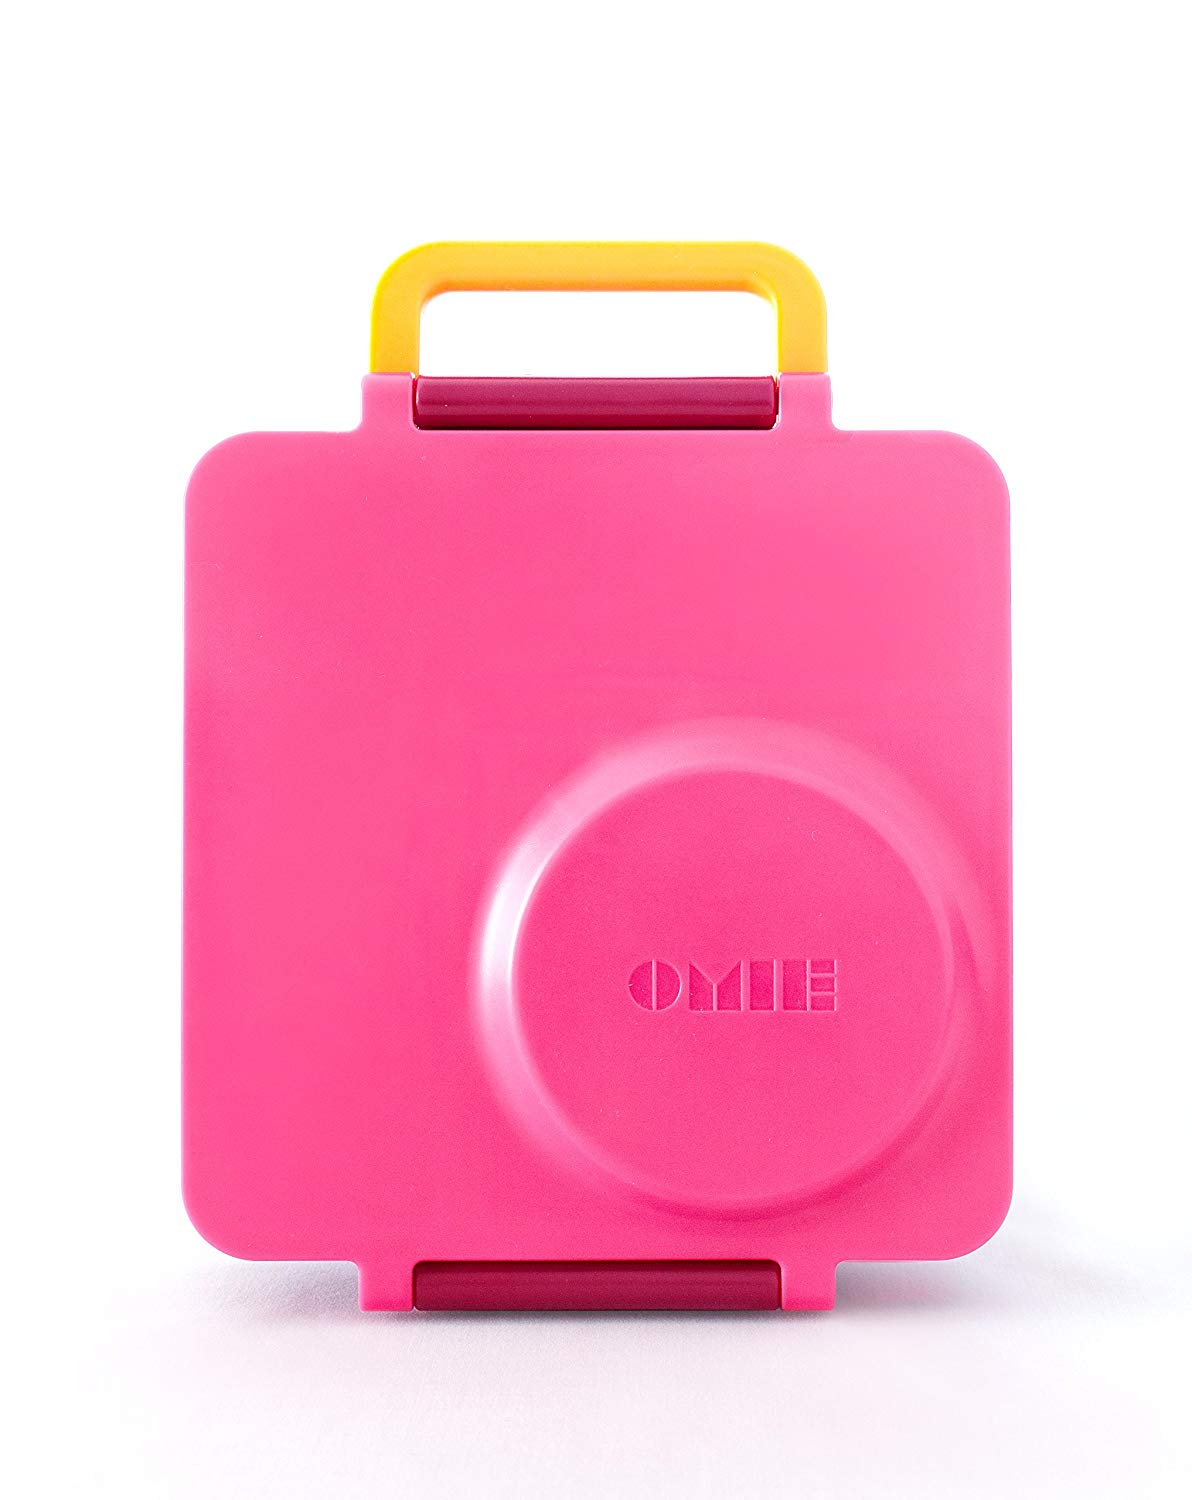 Omiebox Bentobox Pink Berry